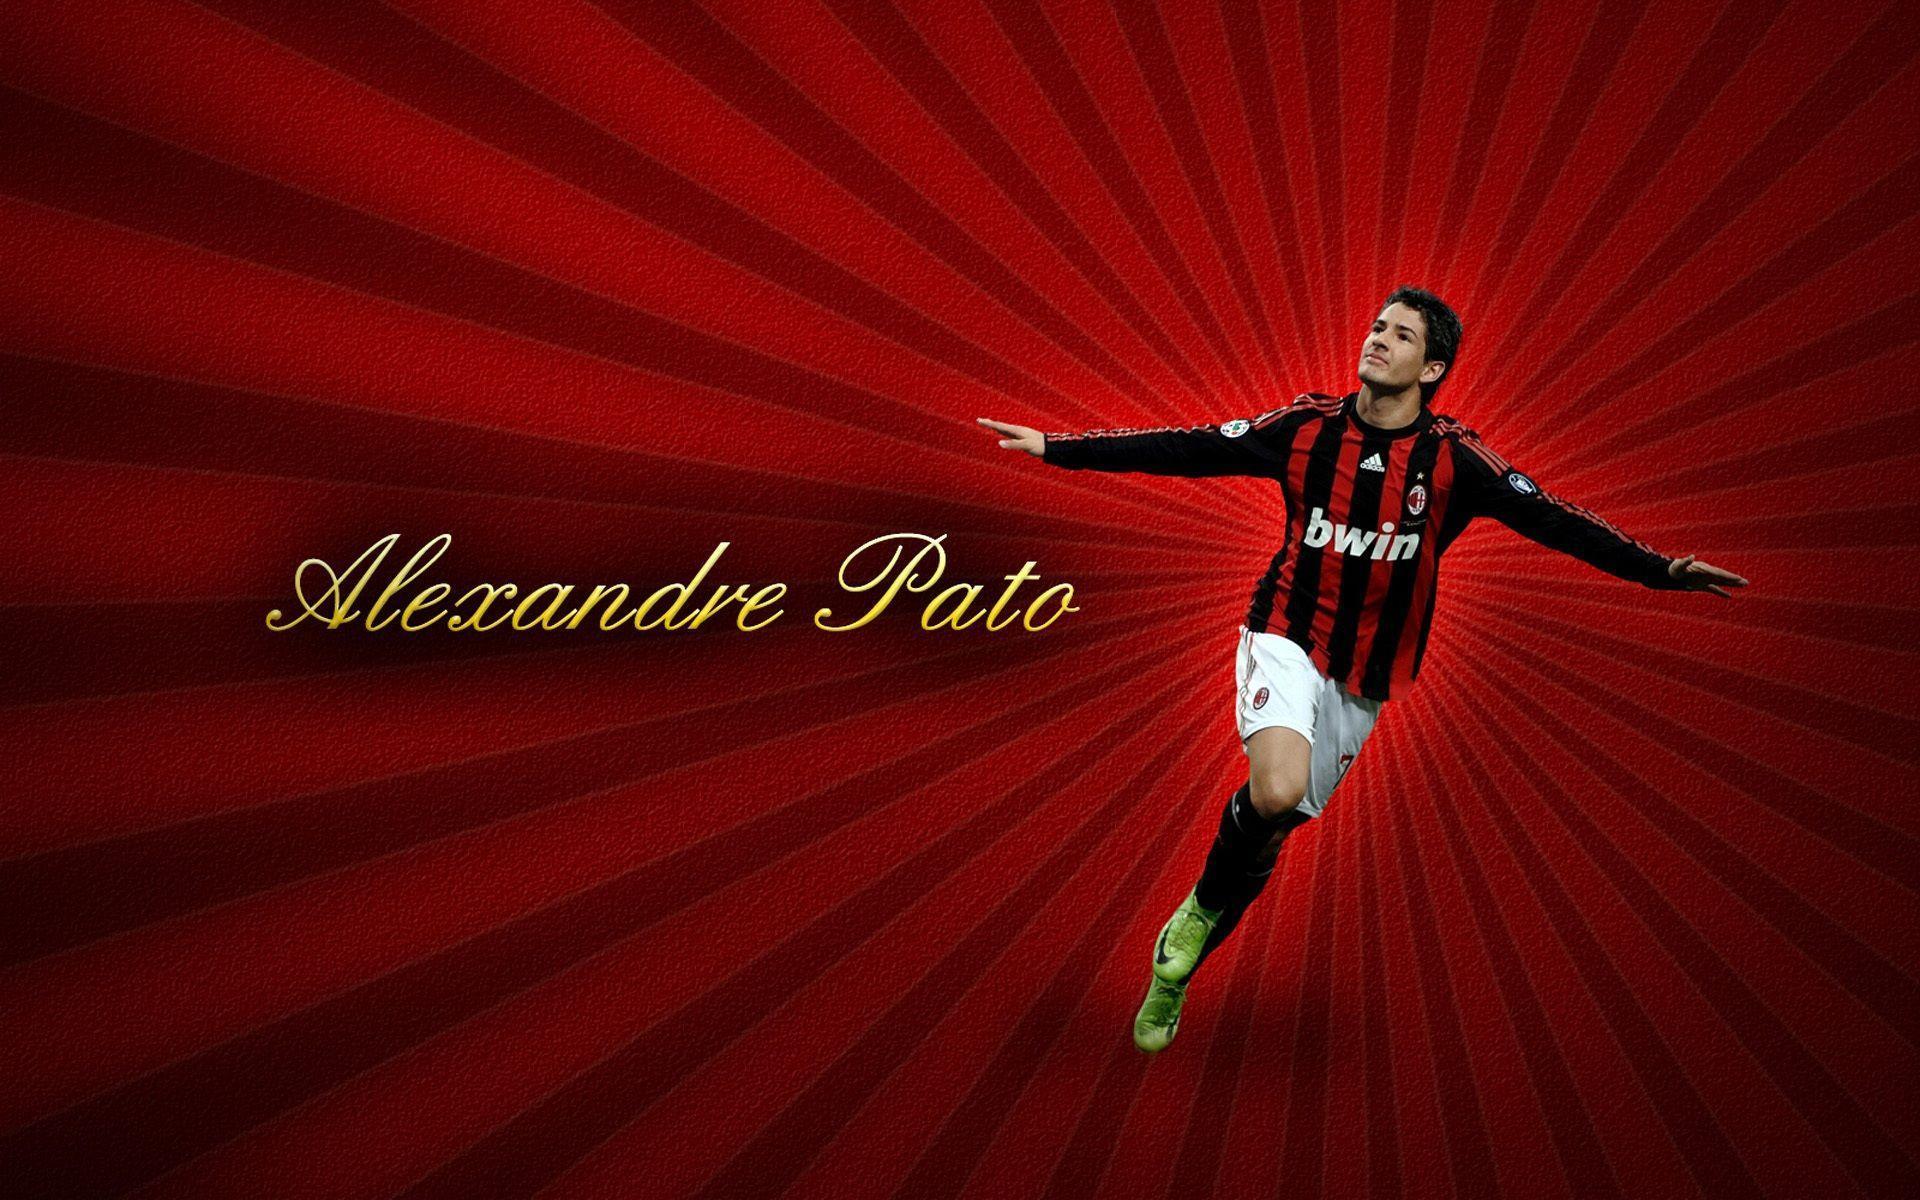 AC Milan HD Wallpaper